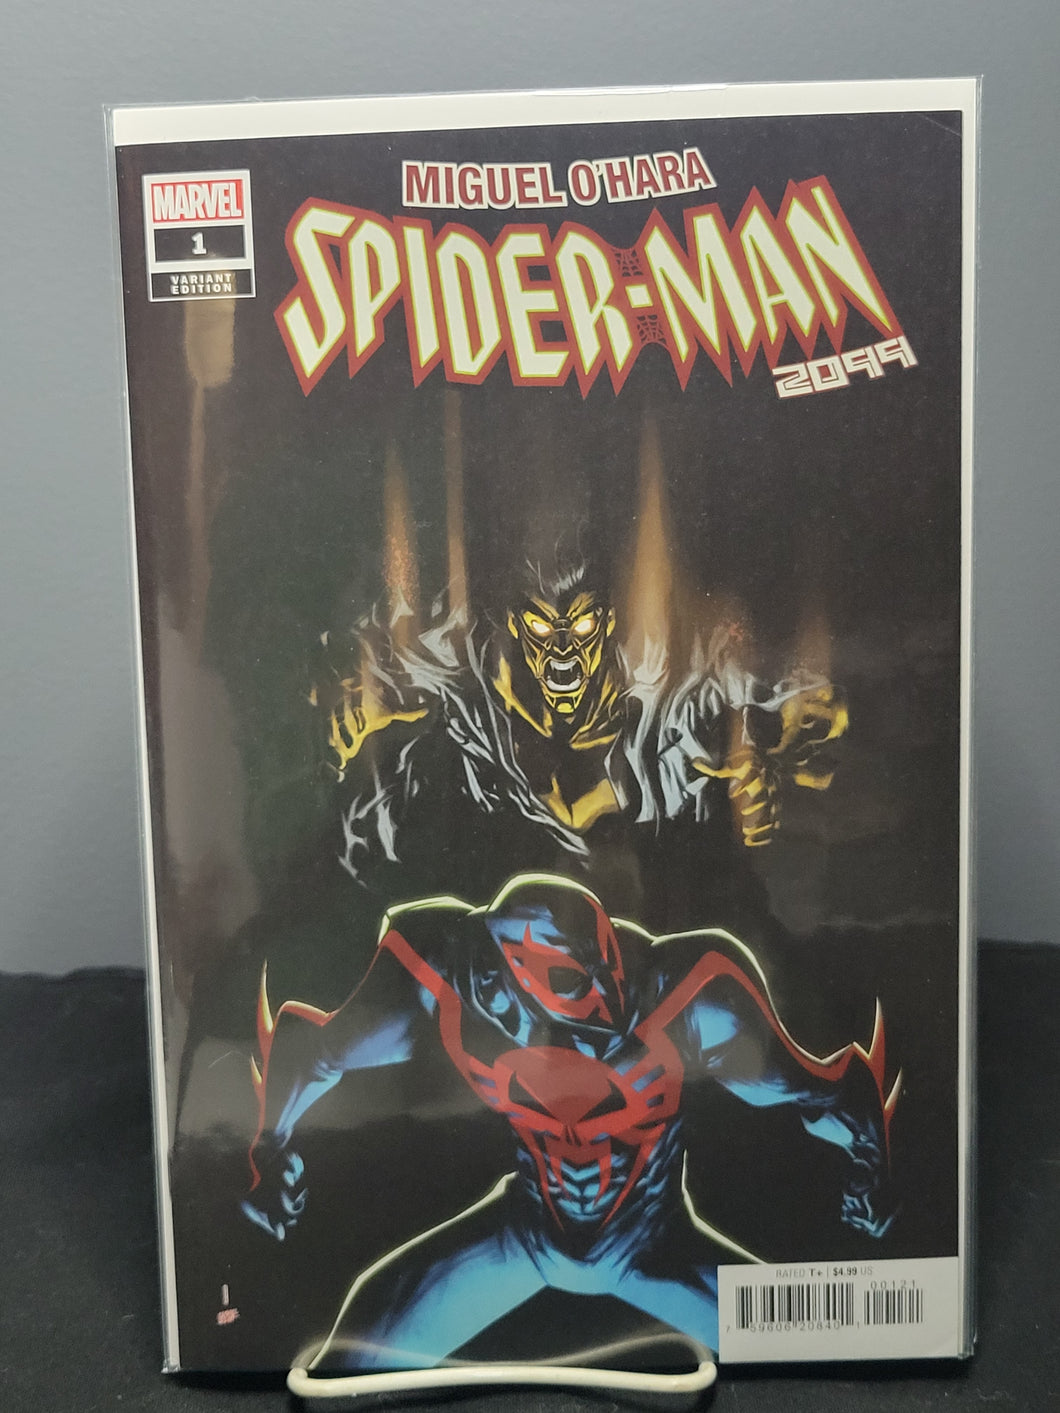 Miguel O'Hara Spider-Man 2099 #1 Variant